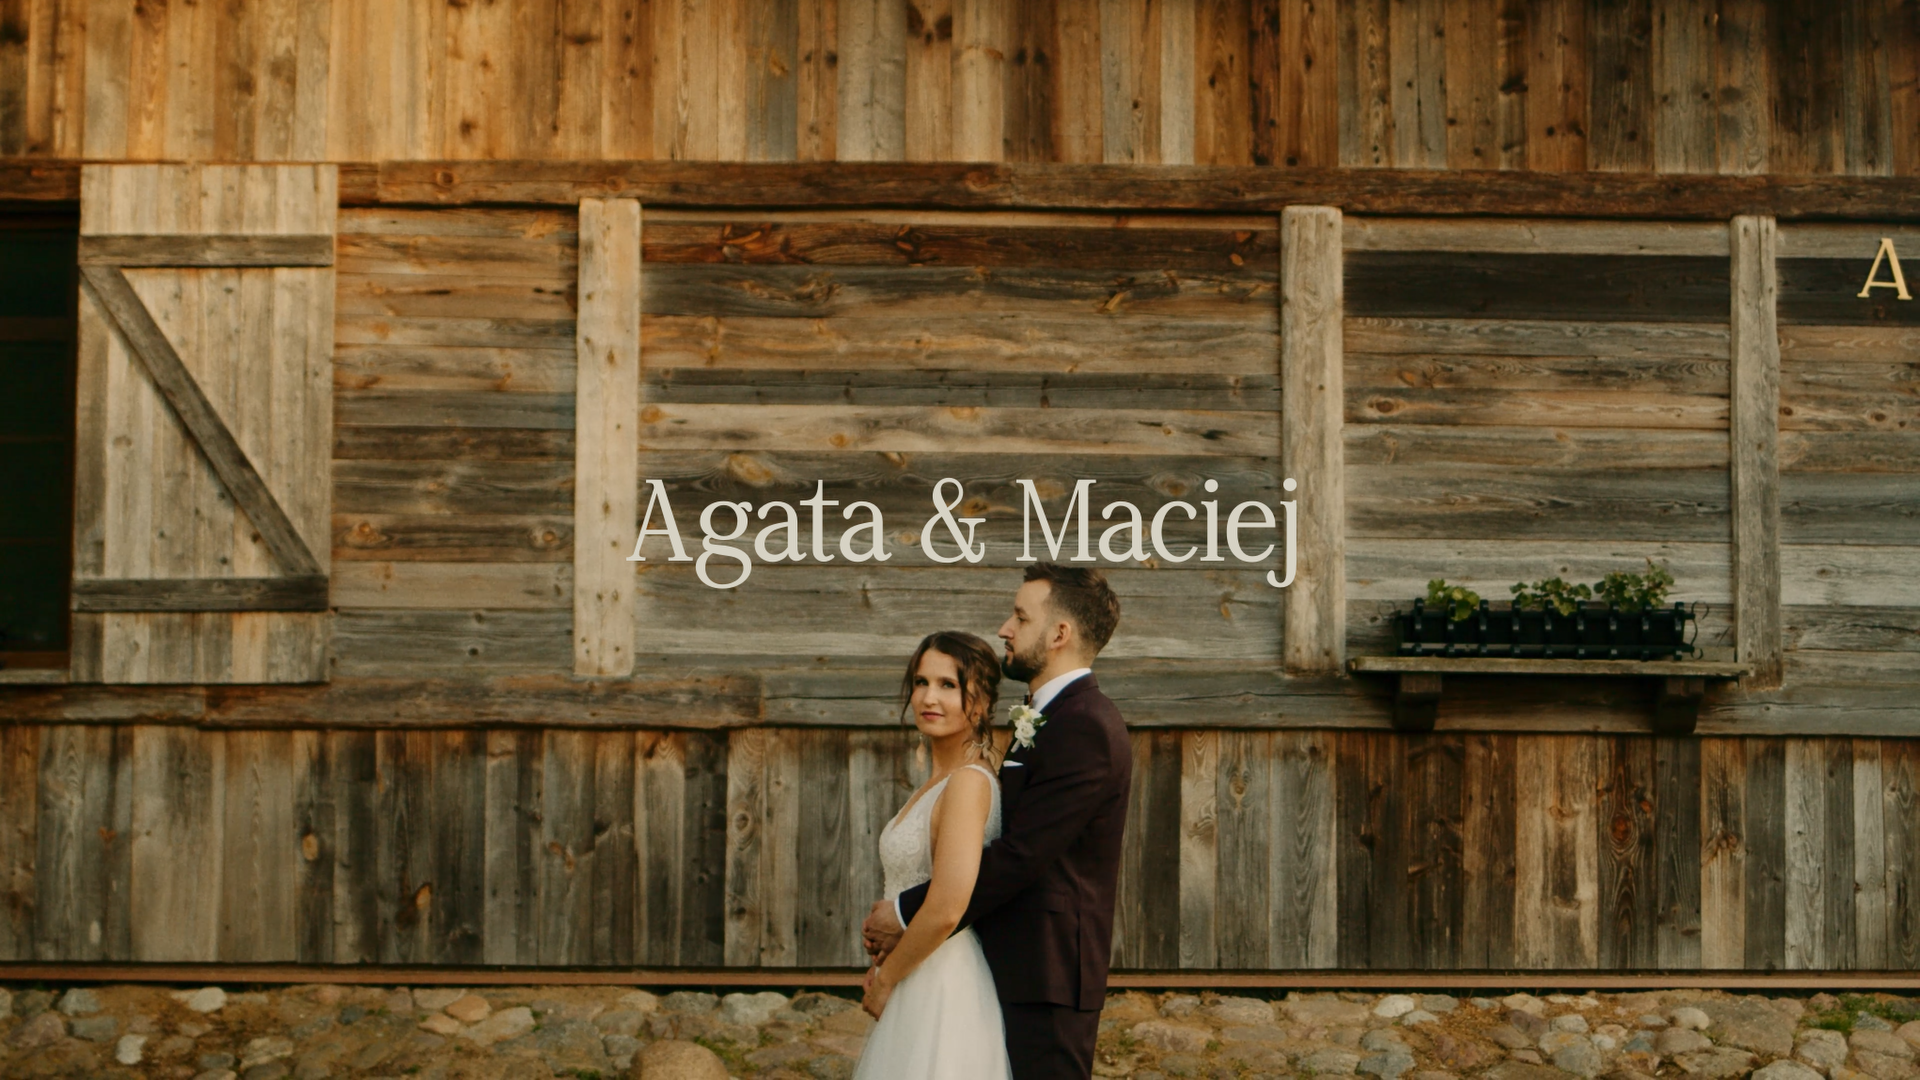 Image of Agata and Maciej